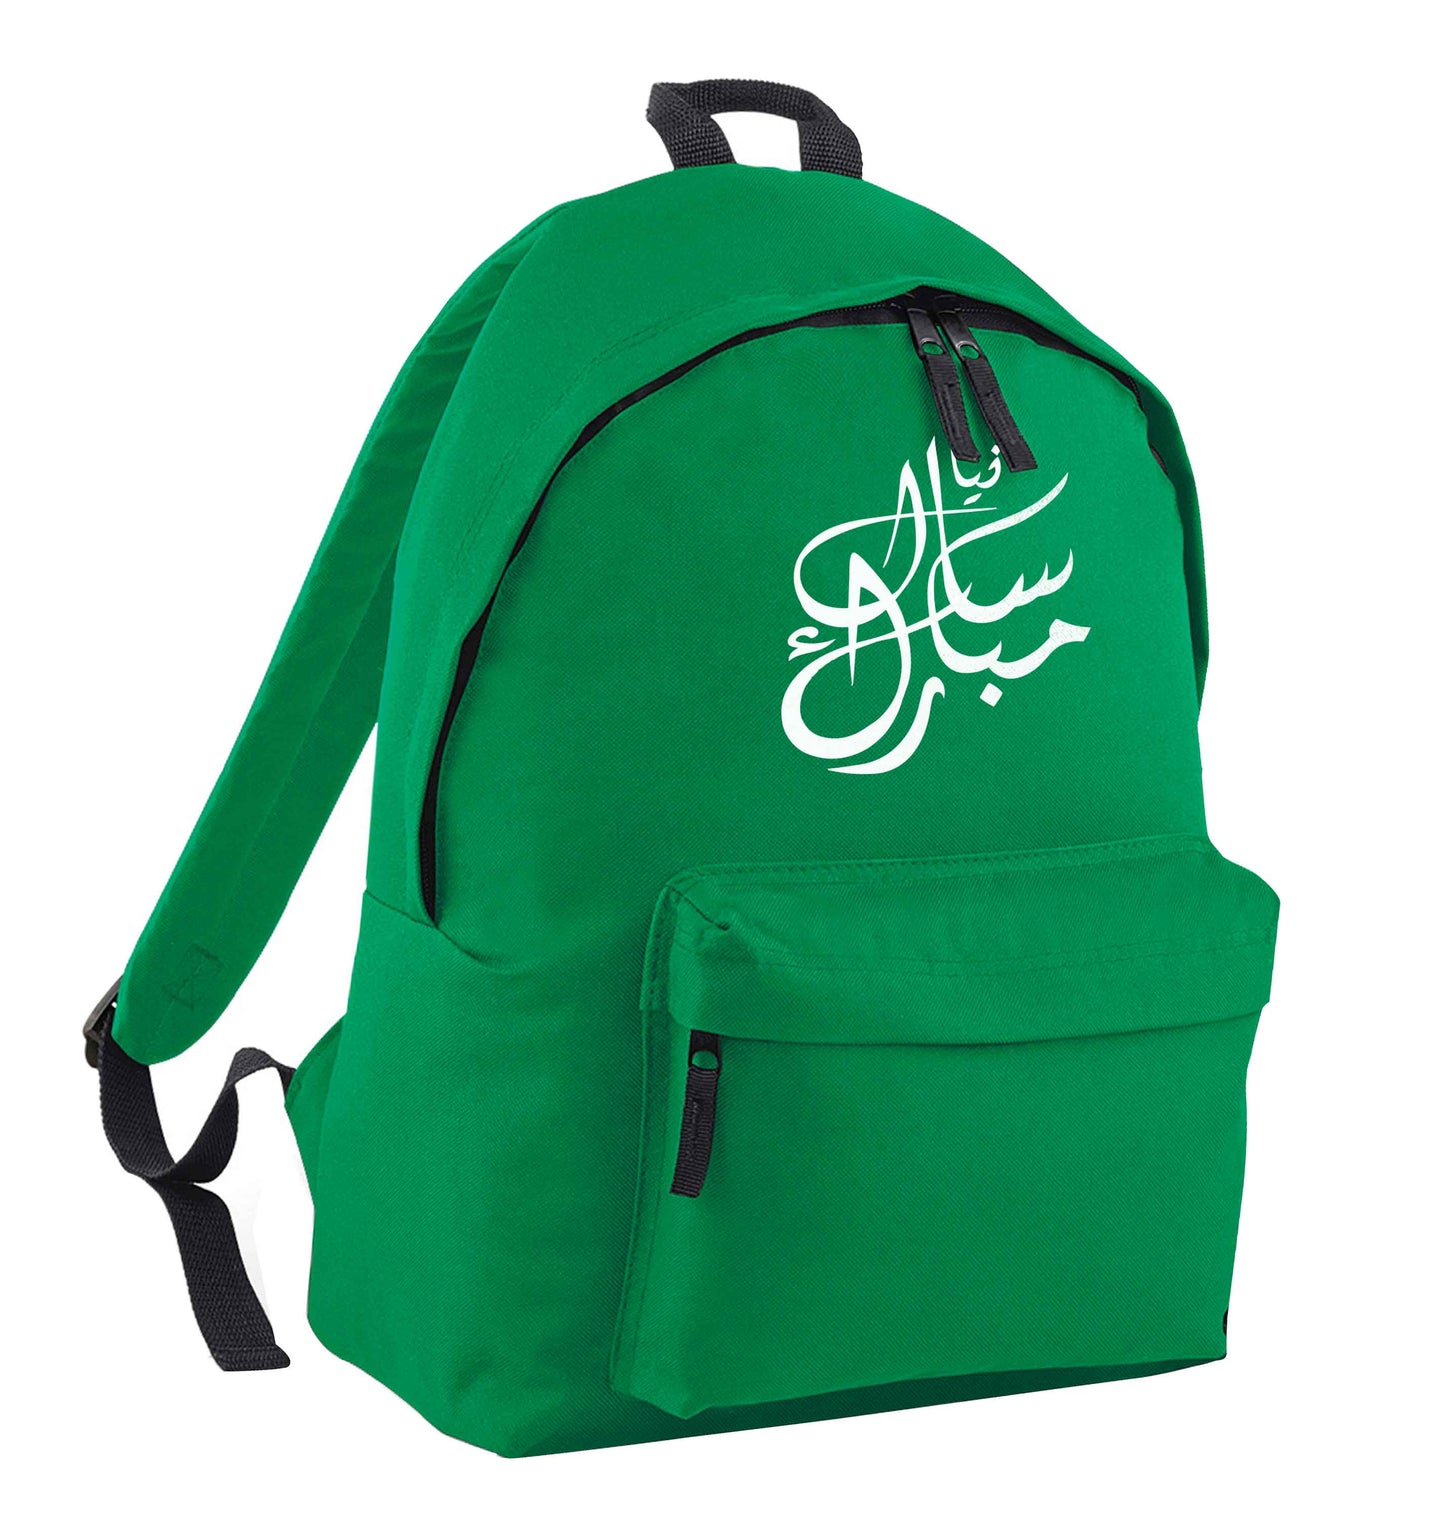 Urdu Naya saal mubarak green adults backpack